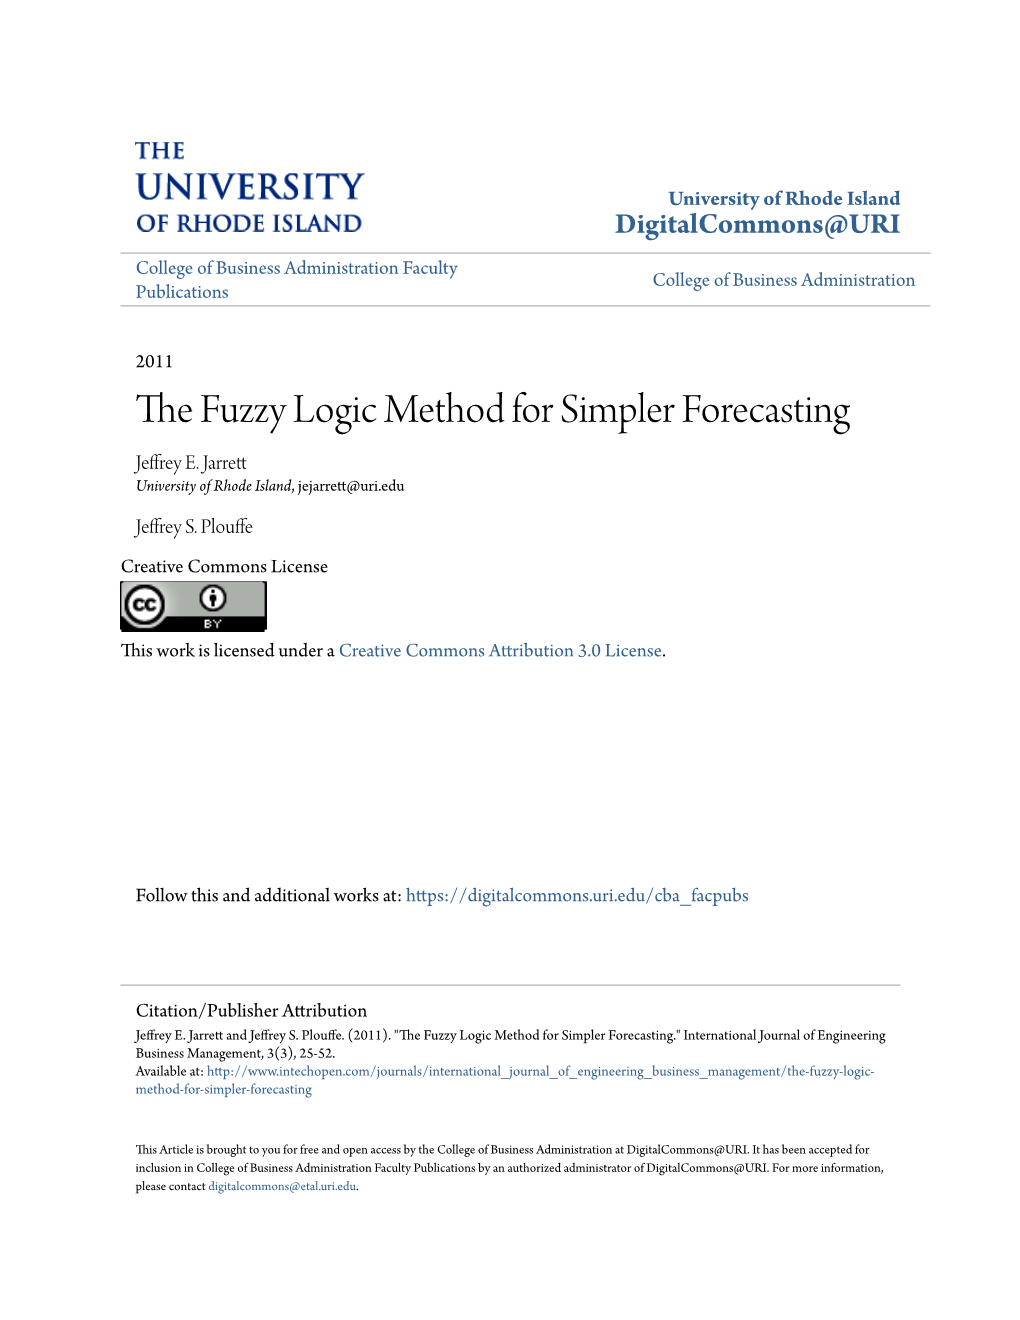 The Fuzzy Logic Method for Simpler Forecasting